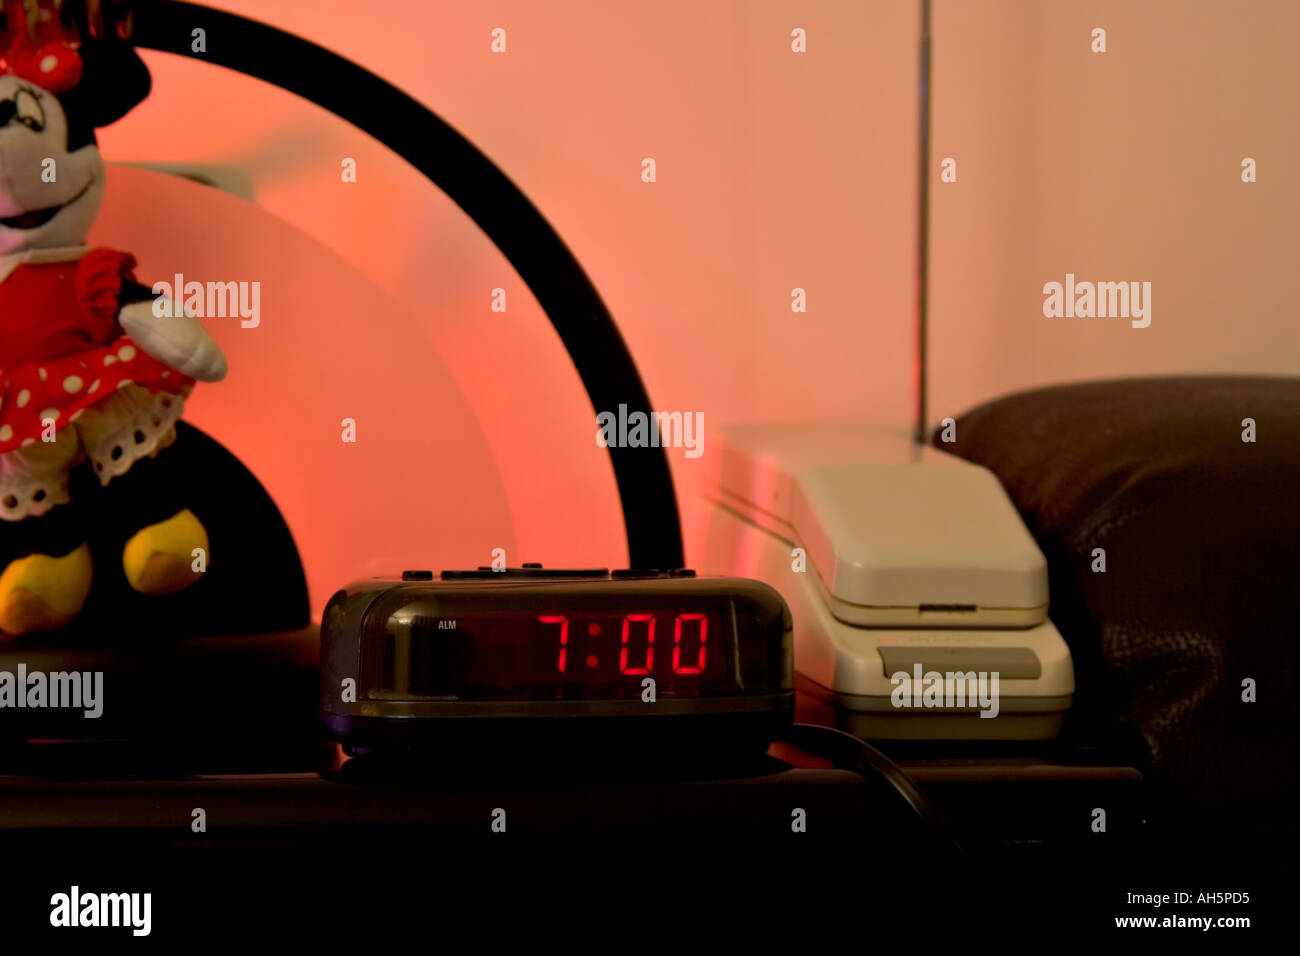 alarm clock with portable telephone Stock Photo